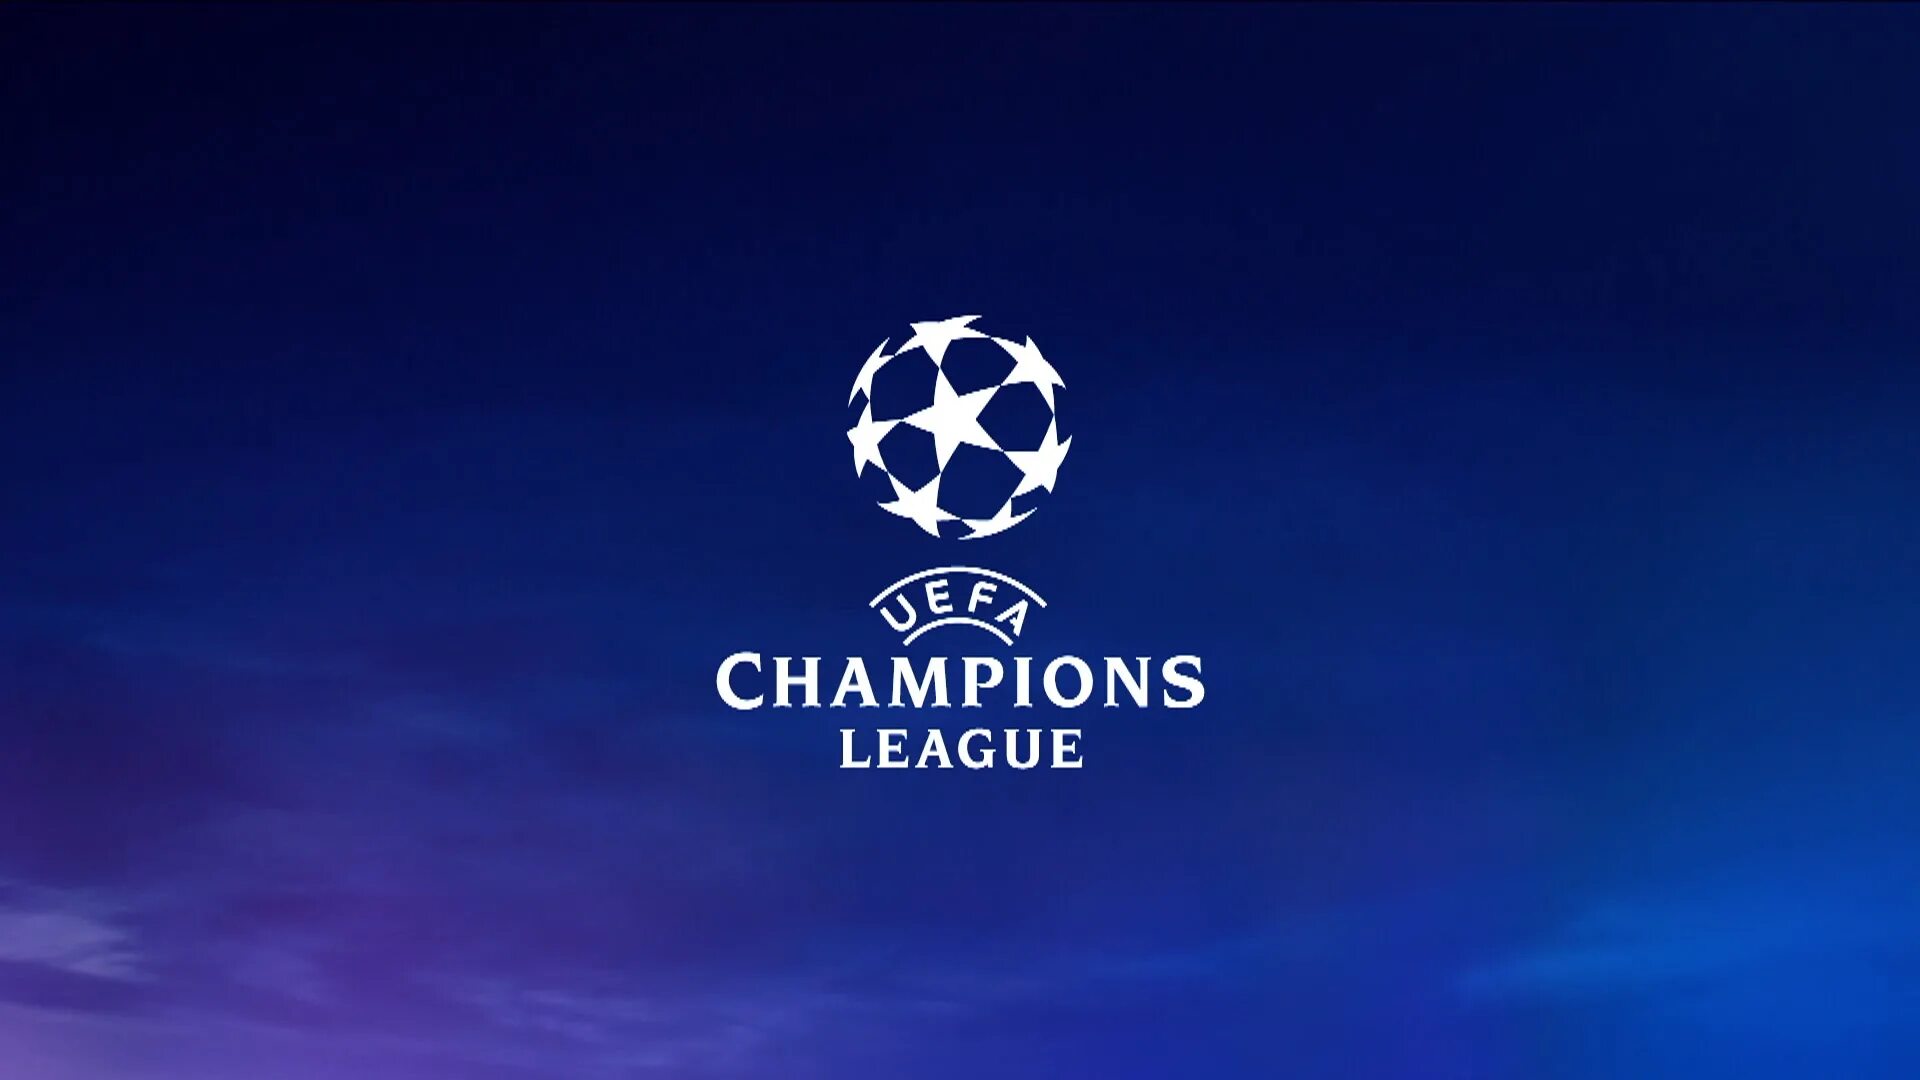 Champions league drawn. Герб Лиги чемпионов УЕФА. Логотип ЛЧ УЕФА. Лига чемпионов УЕФА логотип. Флаг Лиги чемпионов.